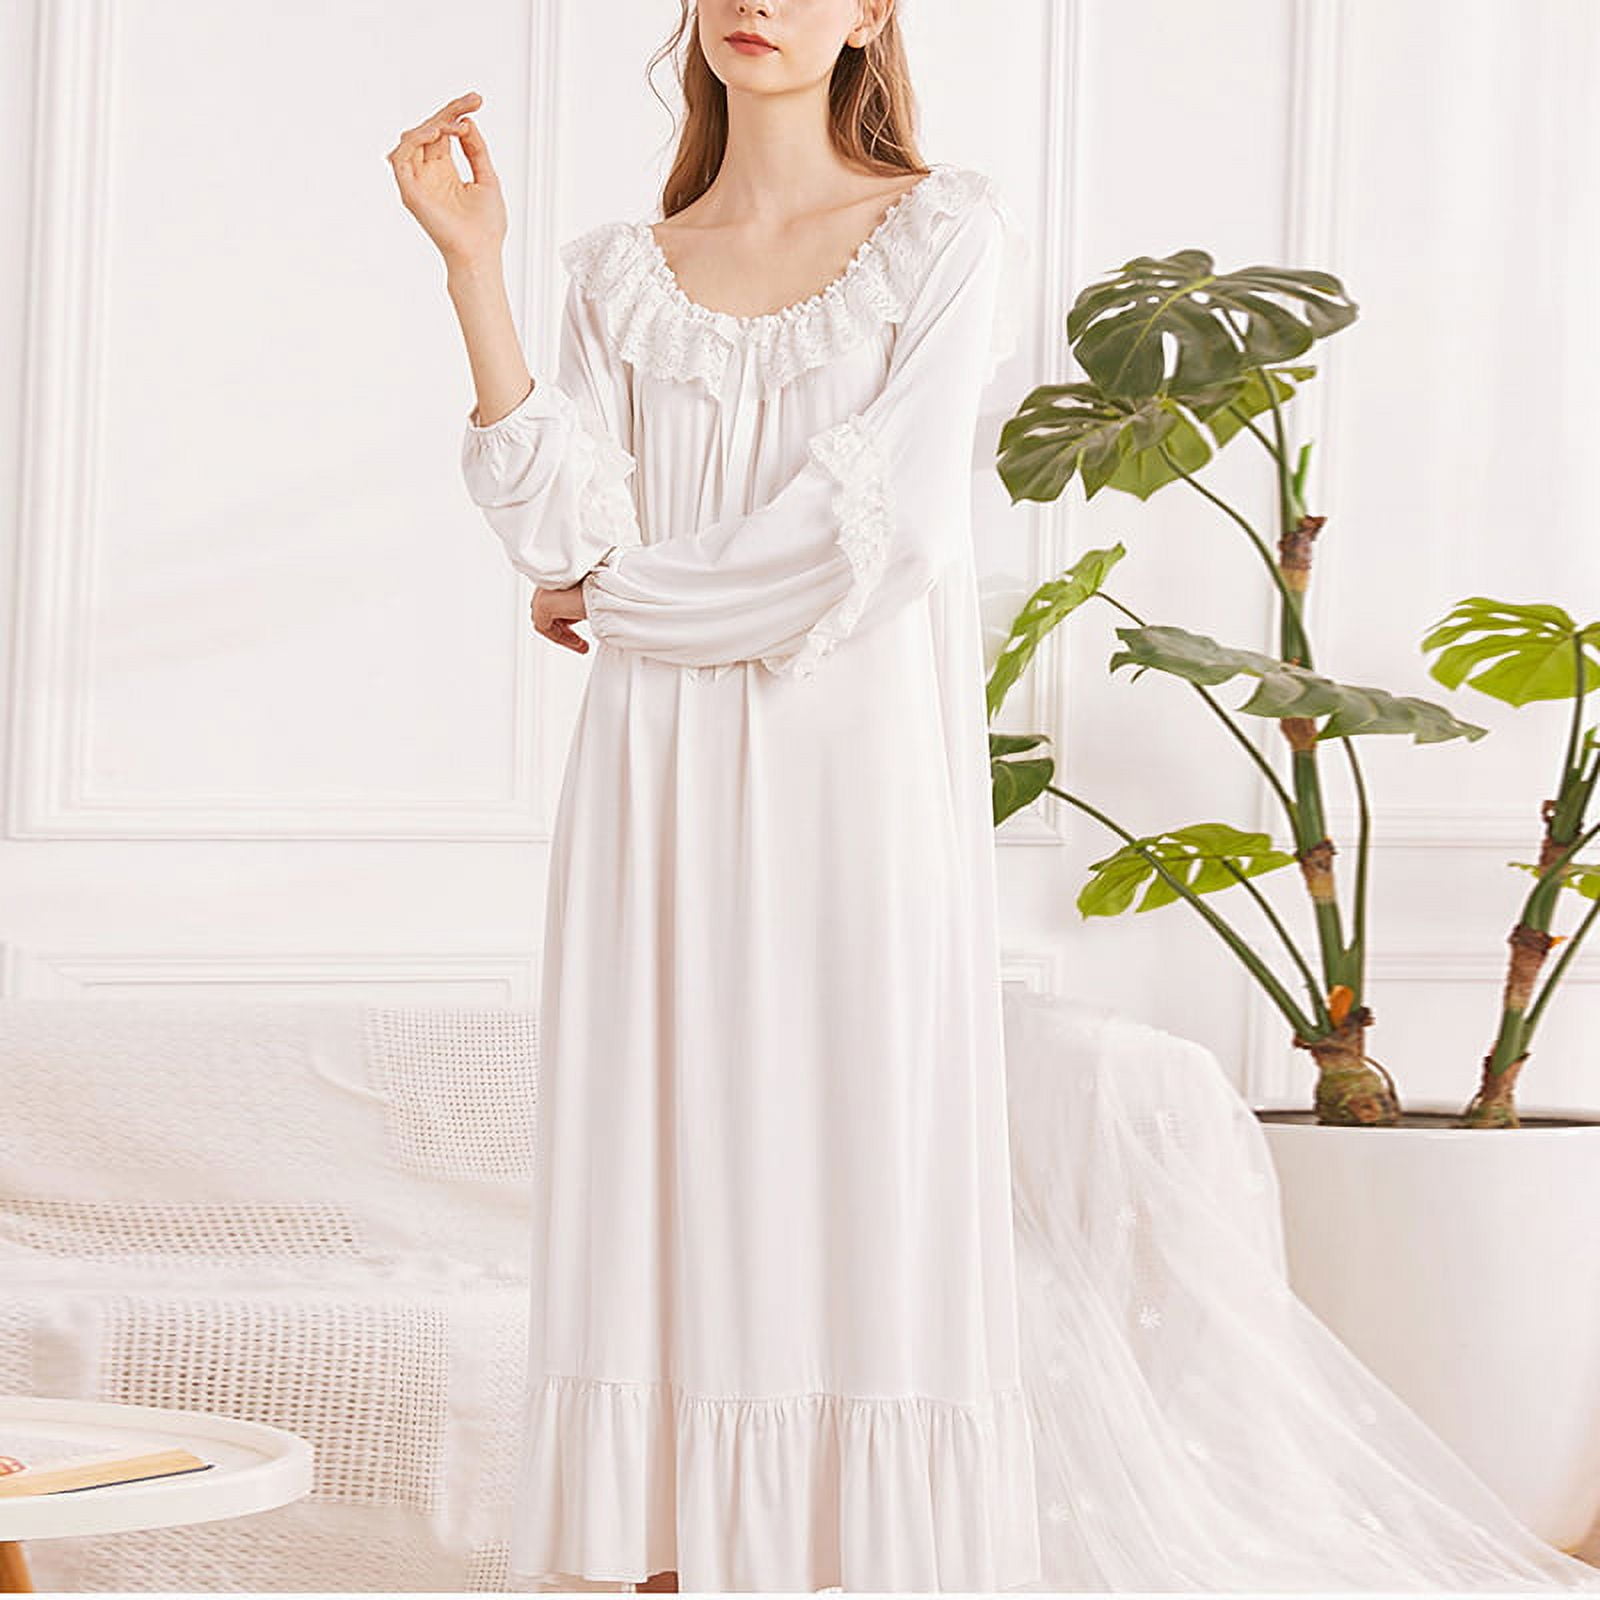 WPYYI Victorian Long Night Dress Women White Vintage Nightgowns